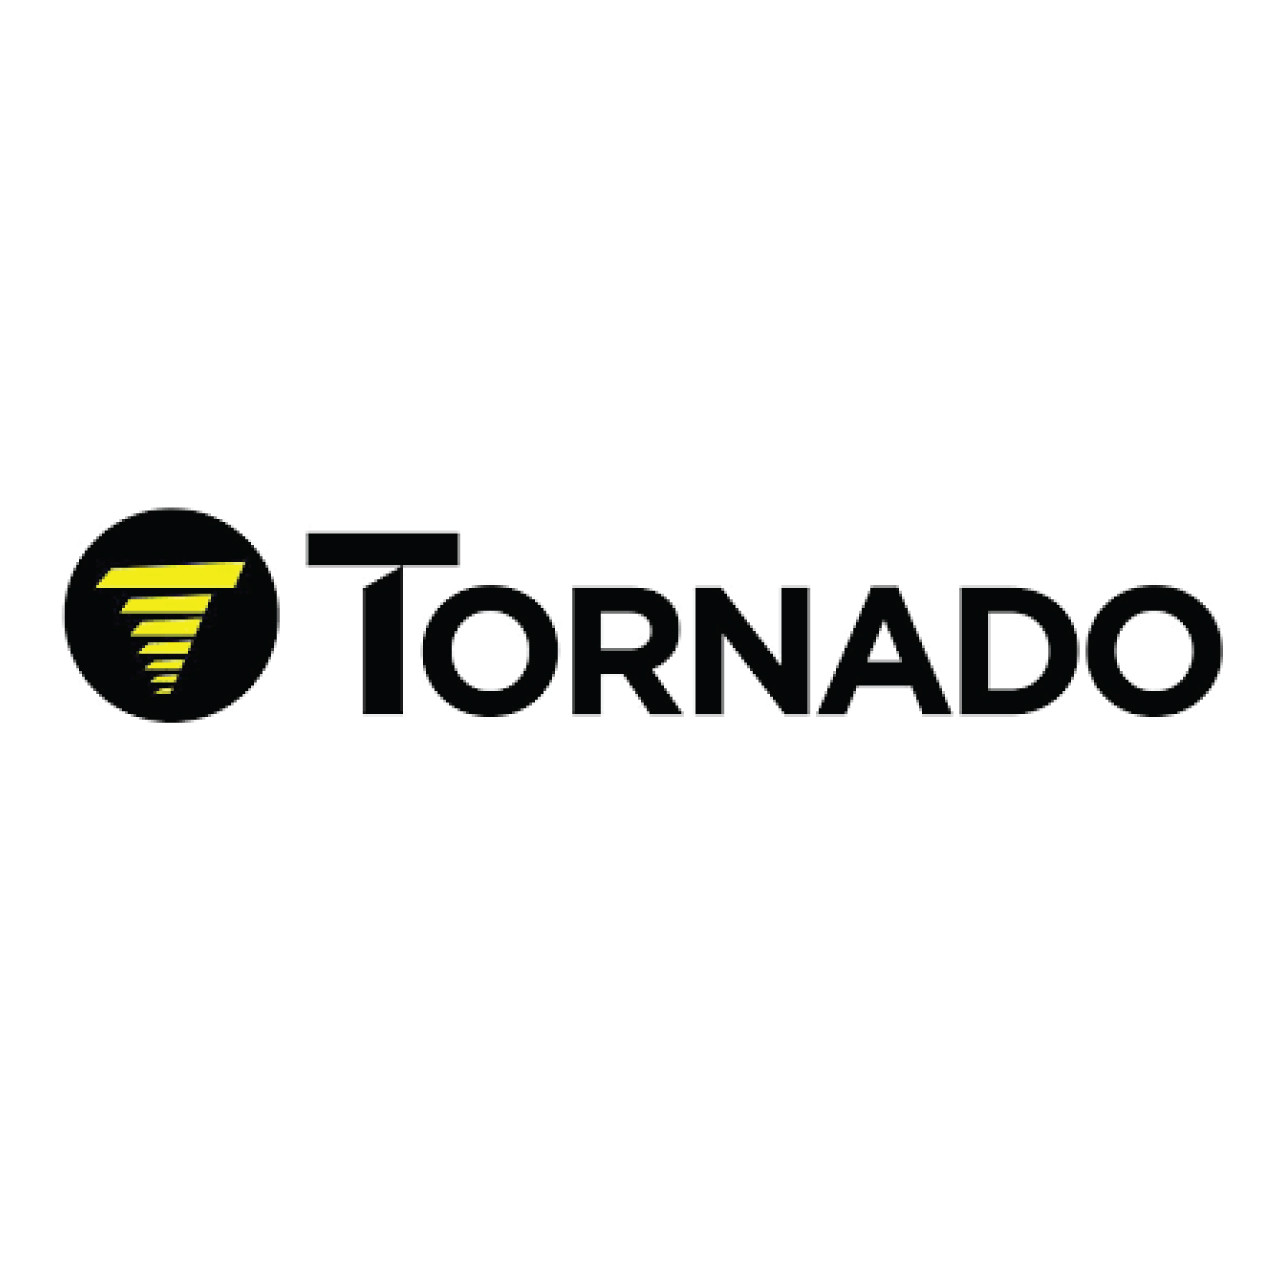 90-0114-0000, Tornado 90-0114-0000, Tornado BRUSH SHAFTS PN 90-0114-0000, Tornado parts, tornado scrubber parts, tornado vacuum parts, tornado extractor parts, tornado floor machine parts